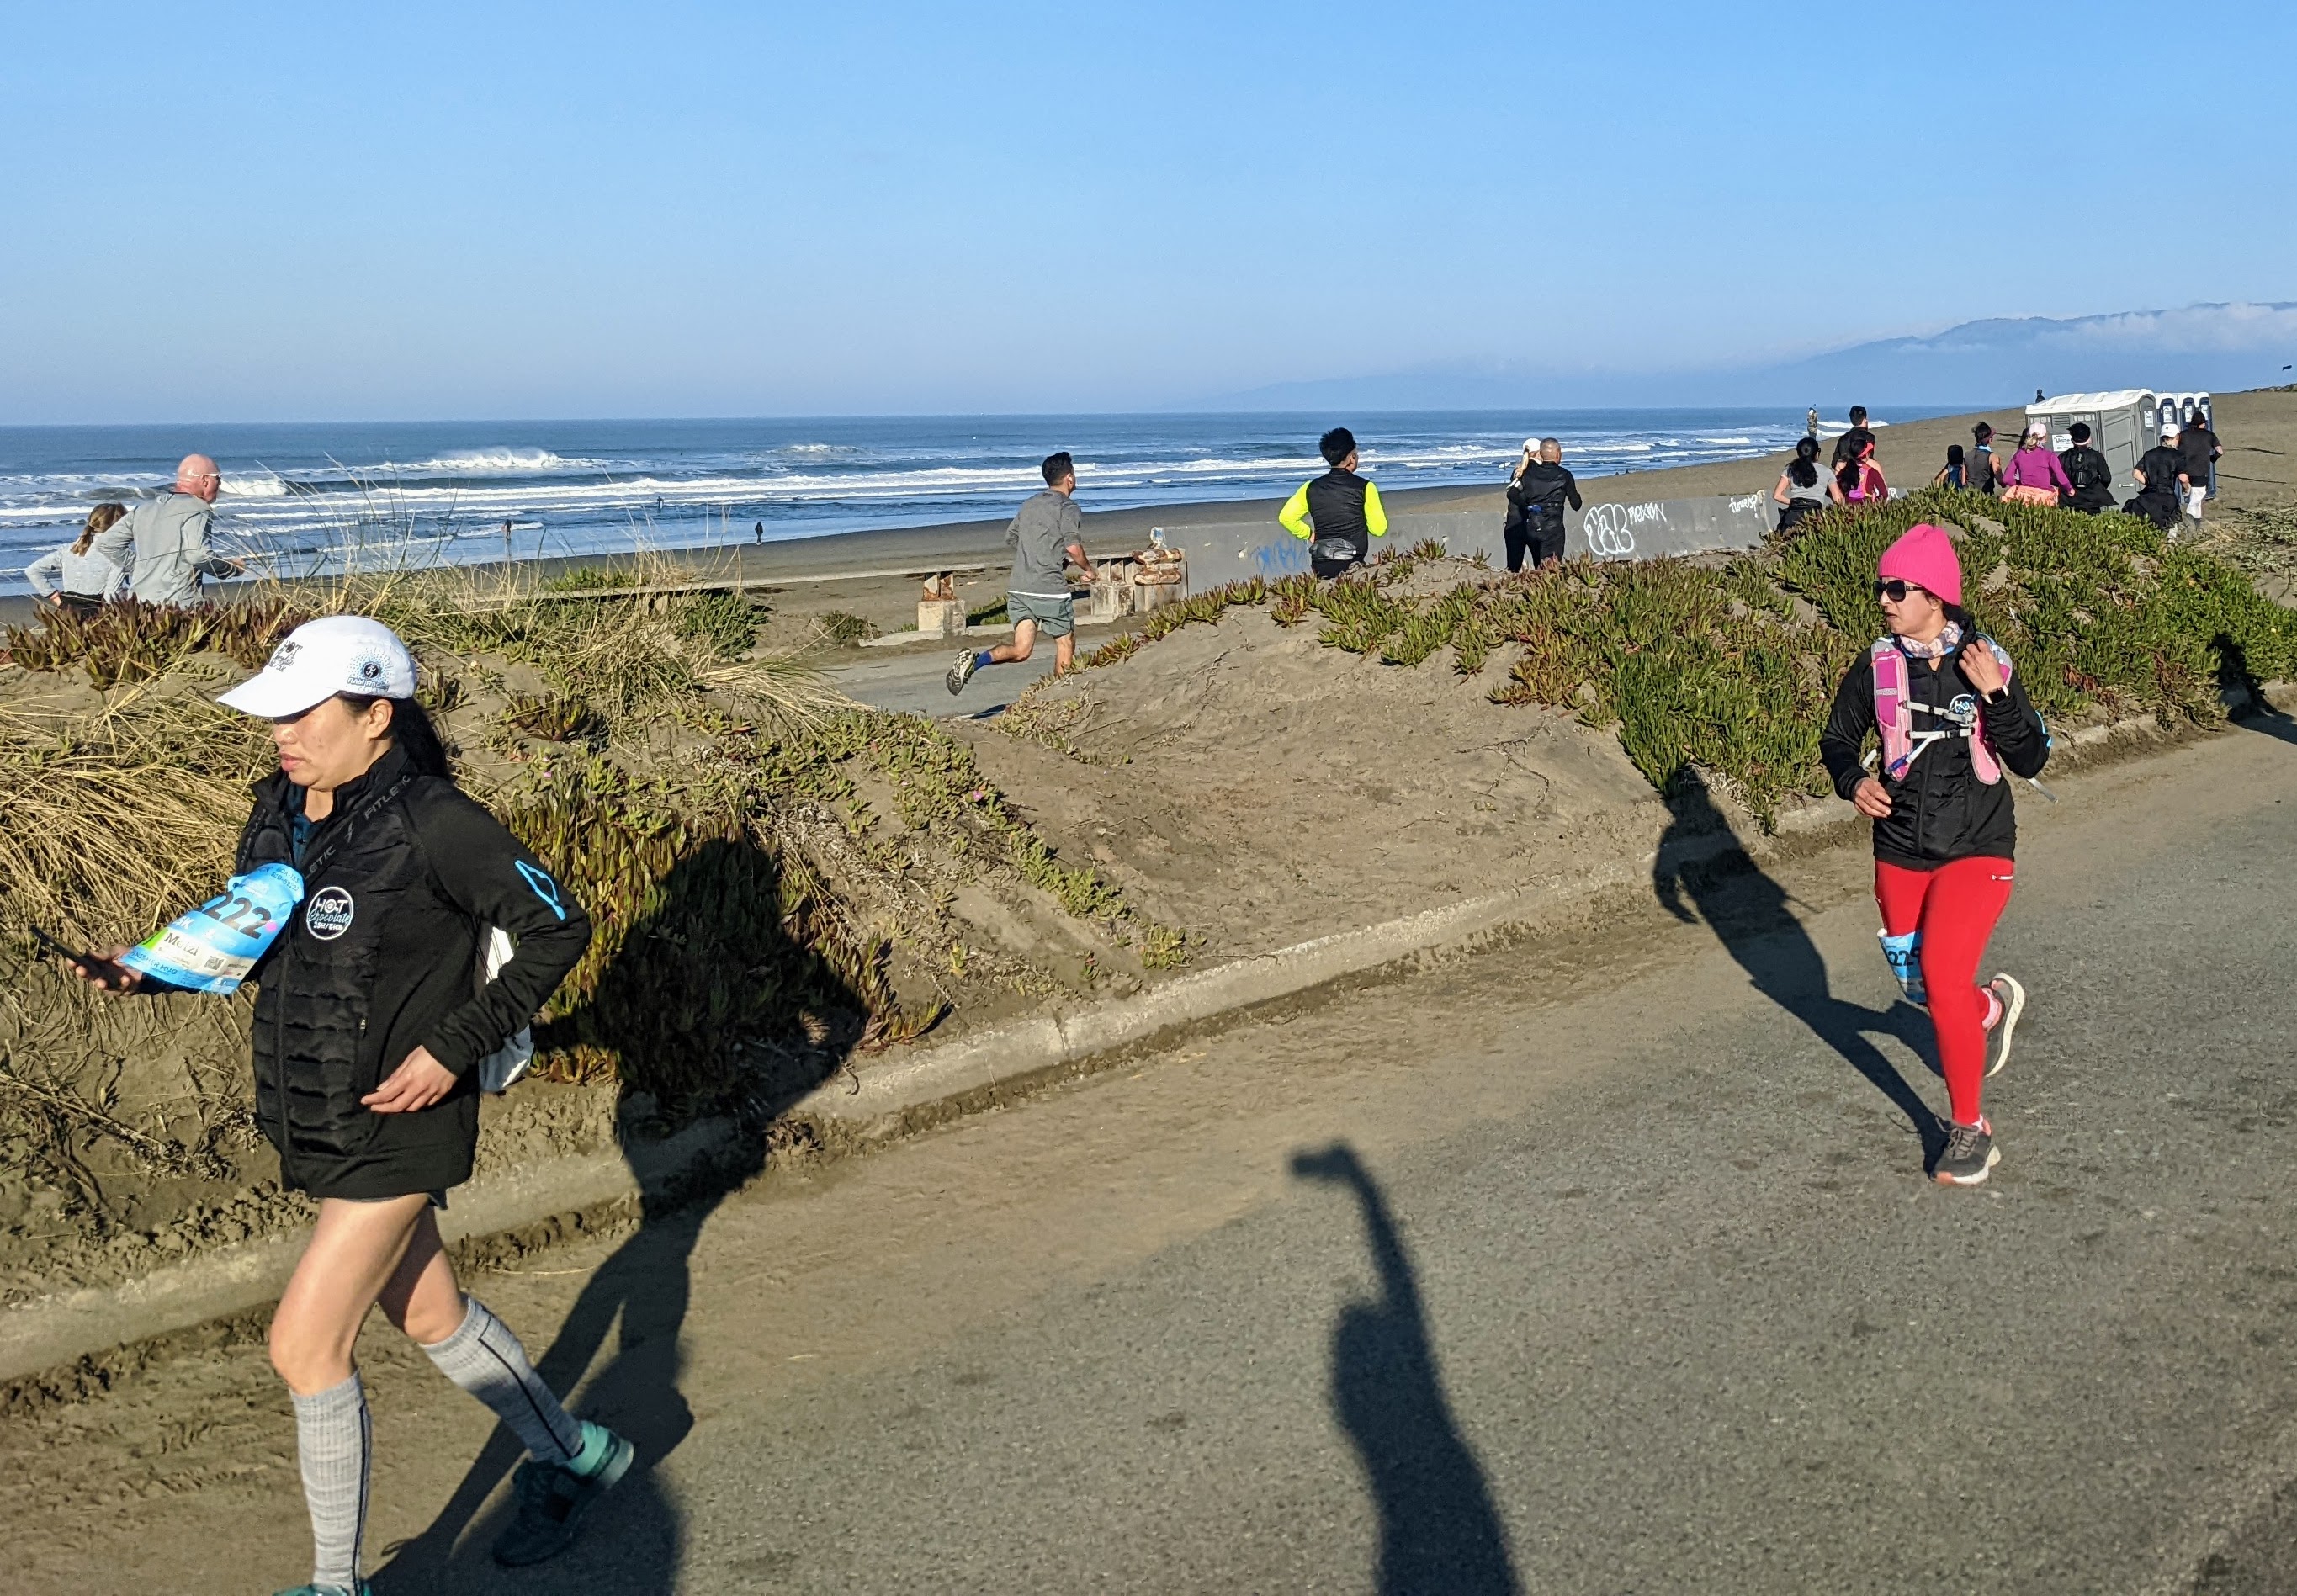 Runners coming and going along Ocean Beach